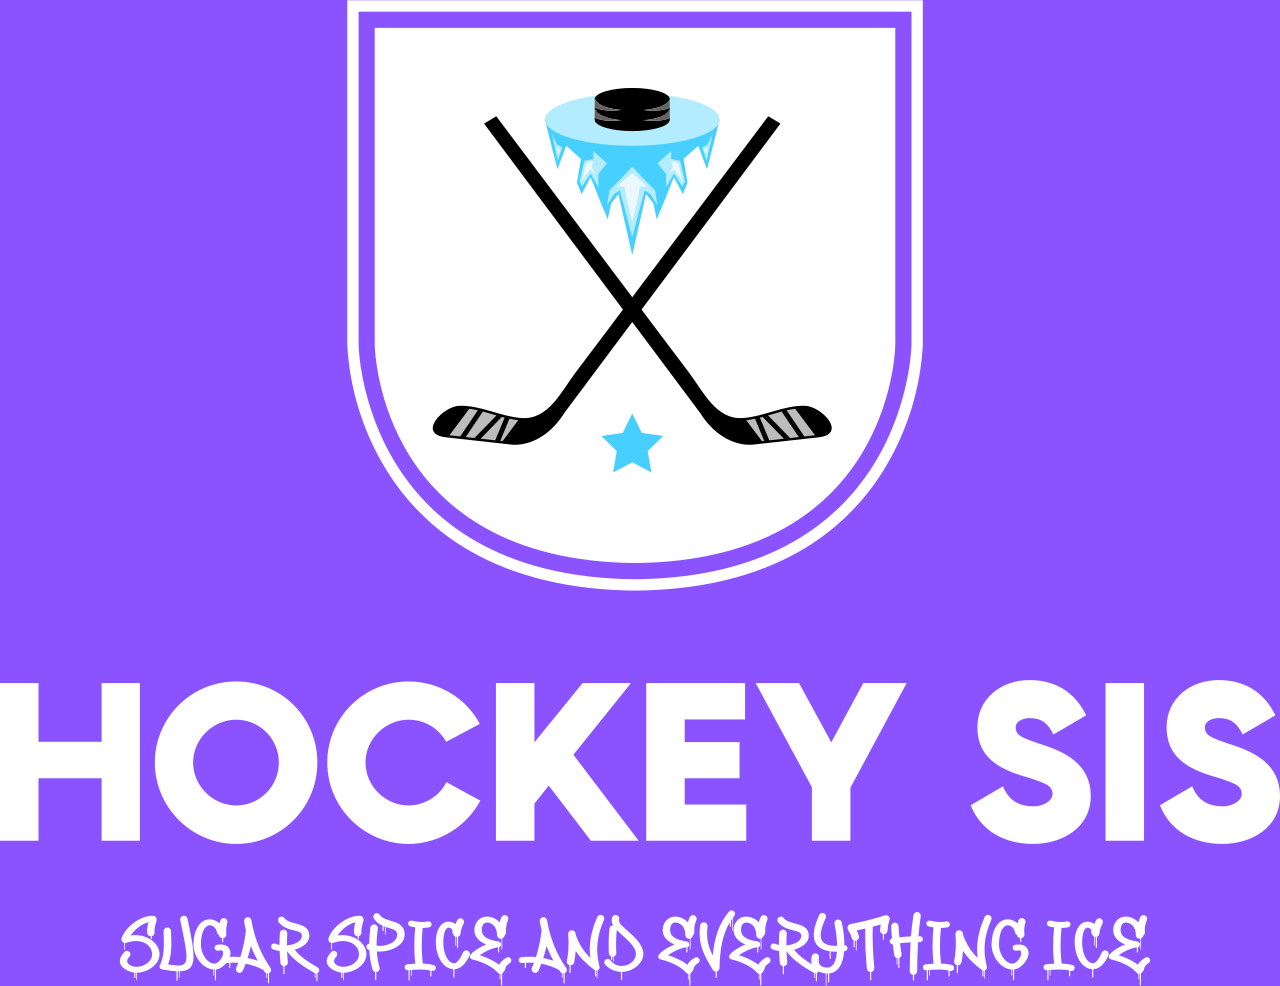 Hockey SIS's web page